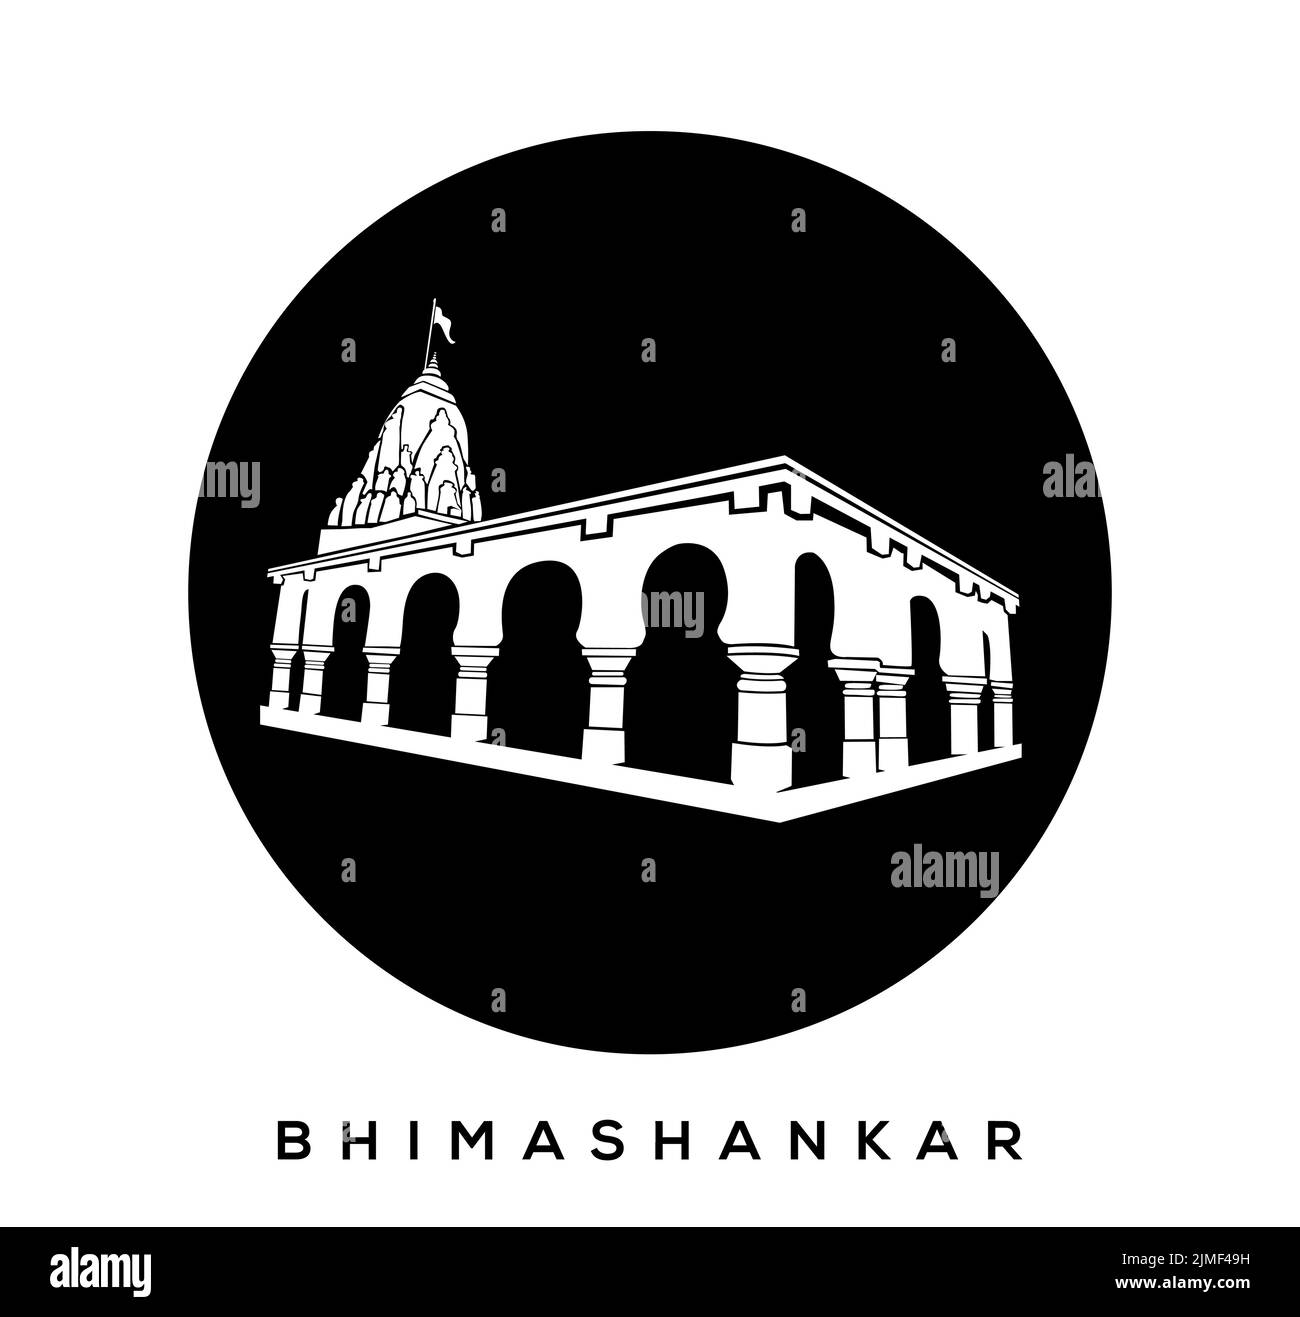 lord shiva (Bhimashankar) temple vector icon. Bhimashankar temple icon. Stock Vector